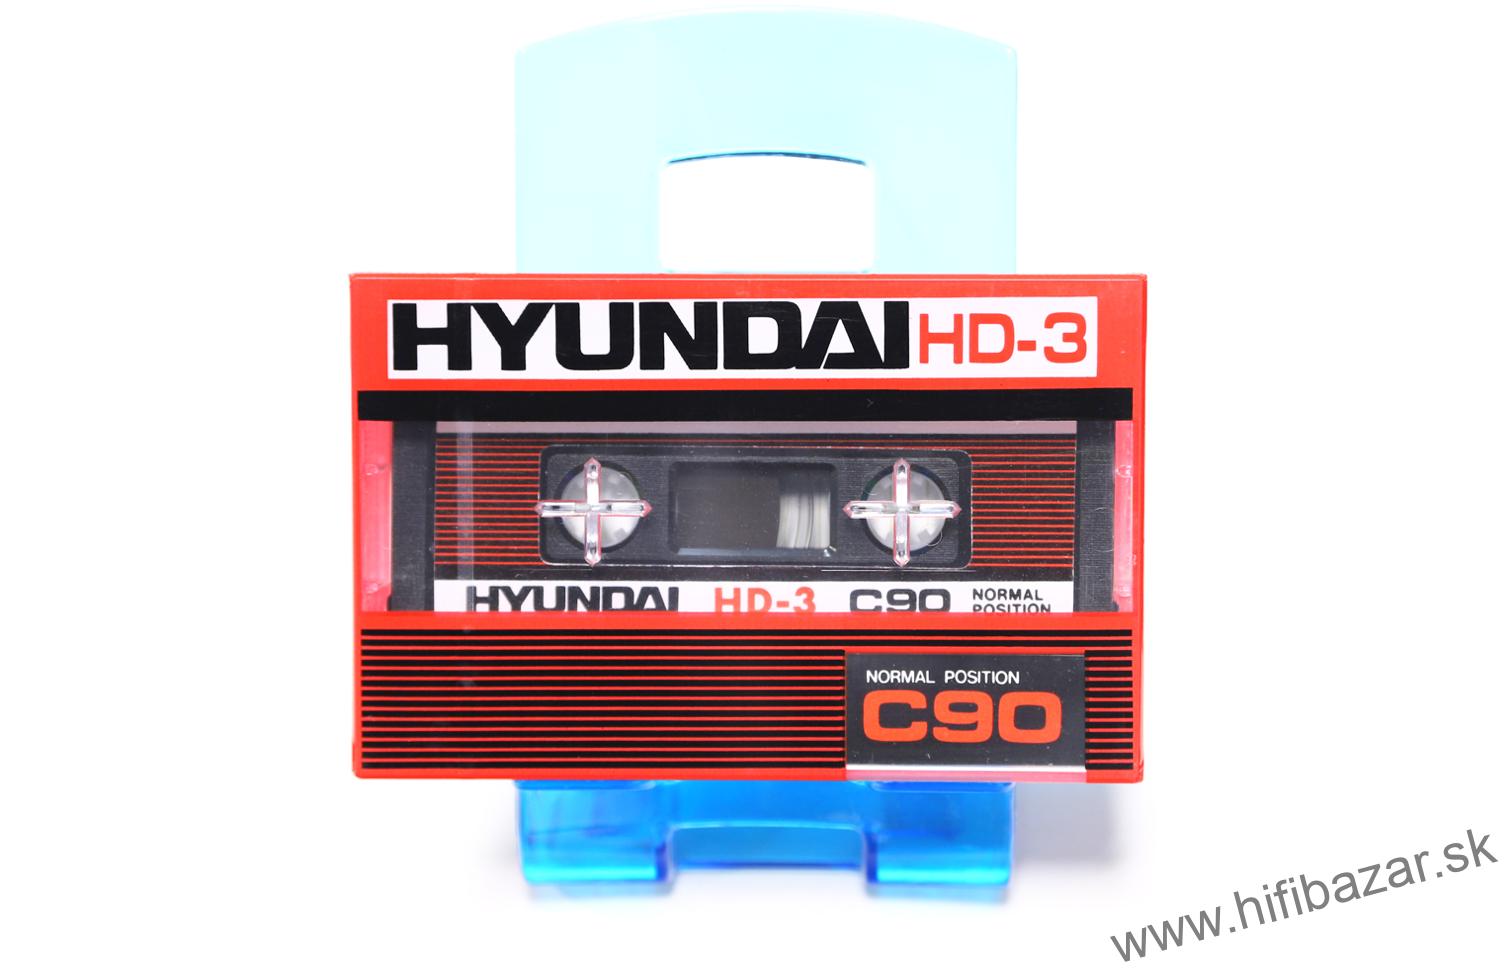 HYUNDAI HD-3 Position Normal